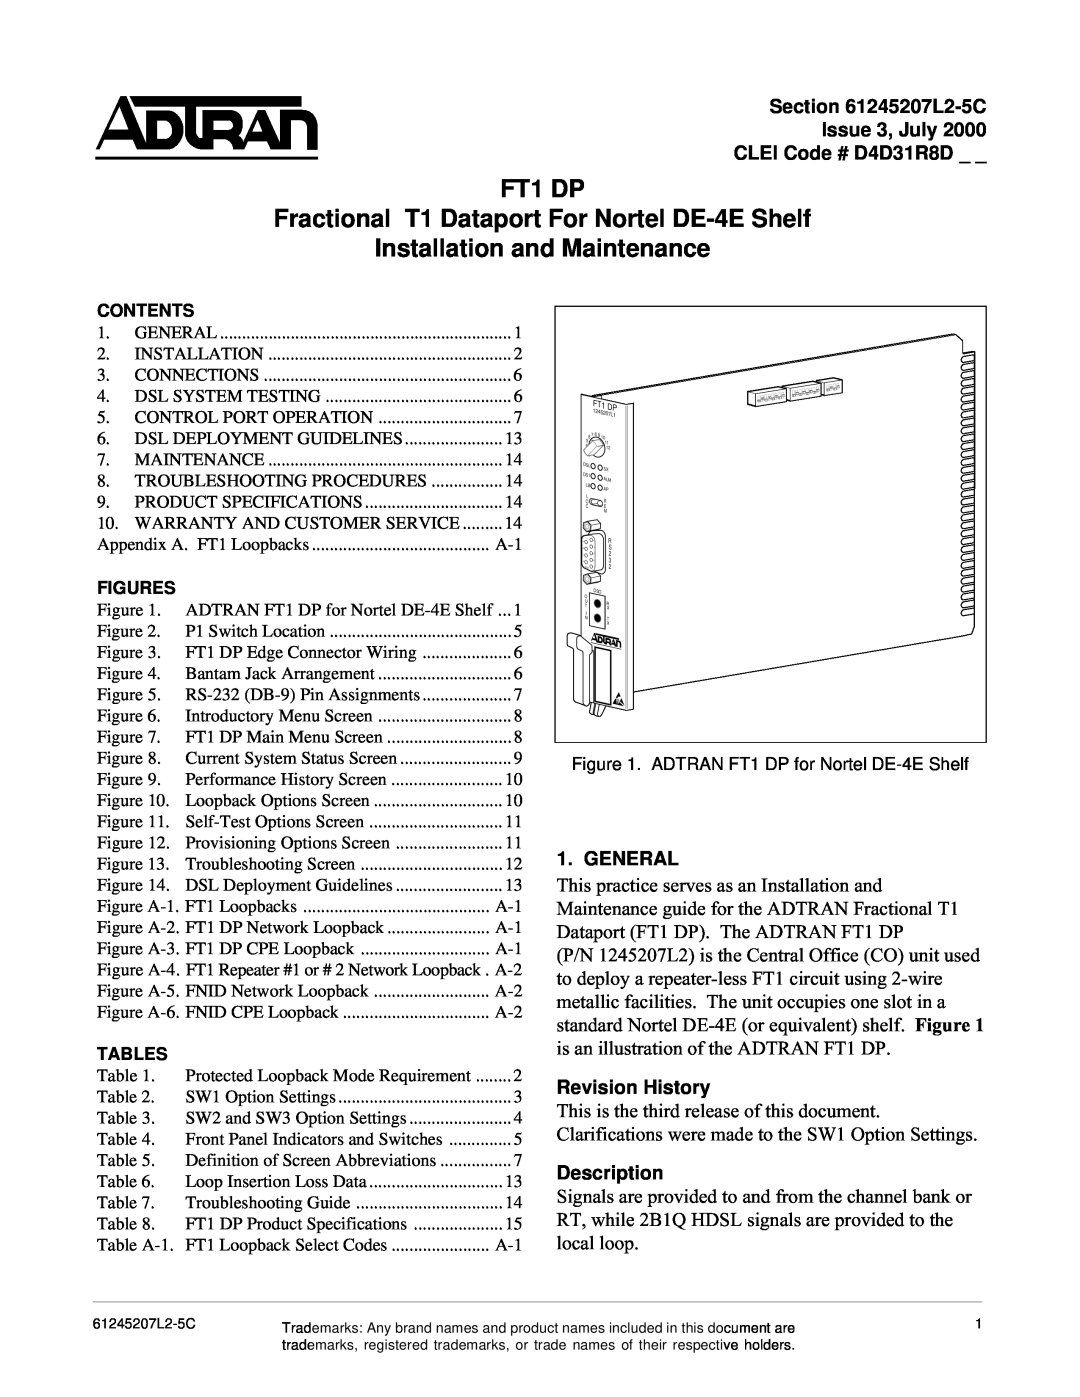 ADTRAN specifications FT1 DP Fractional T1 Dataport For Nortel DE-4E Shelf, Installation and Maintenance, General 